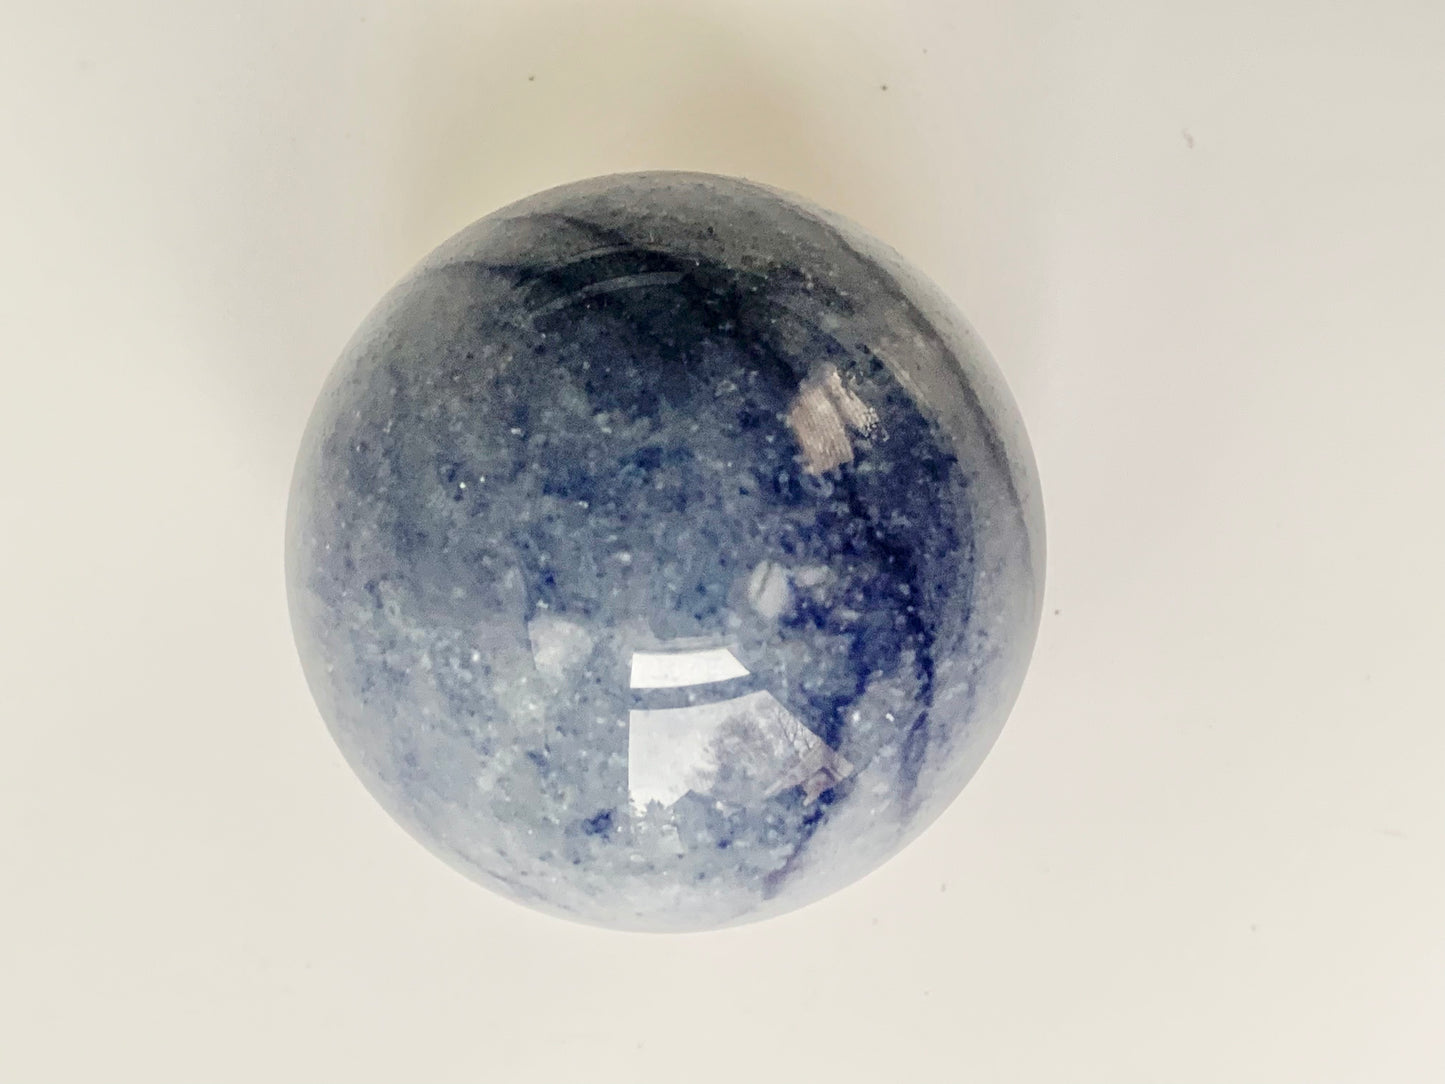 Blue aventurine sphere, 54-55 mm